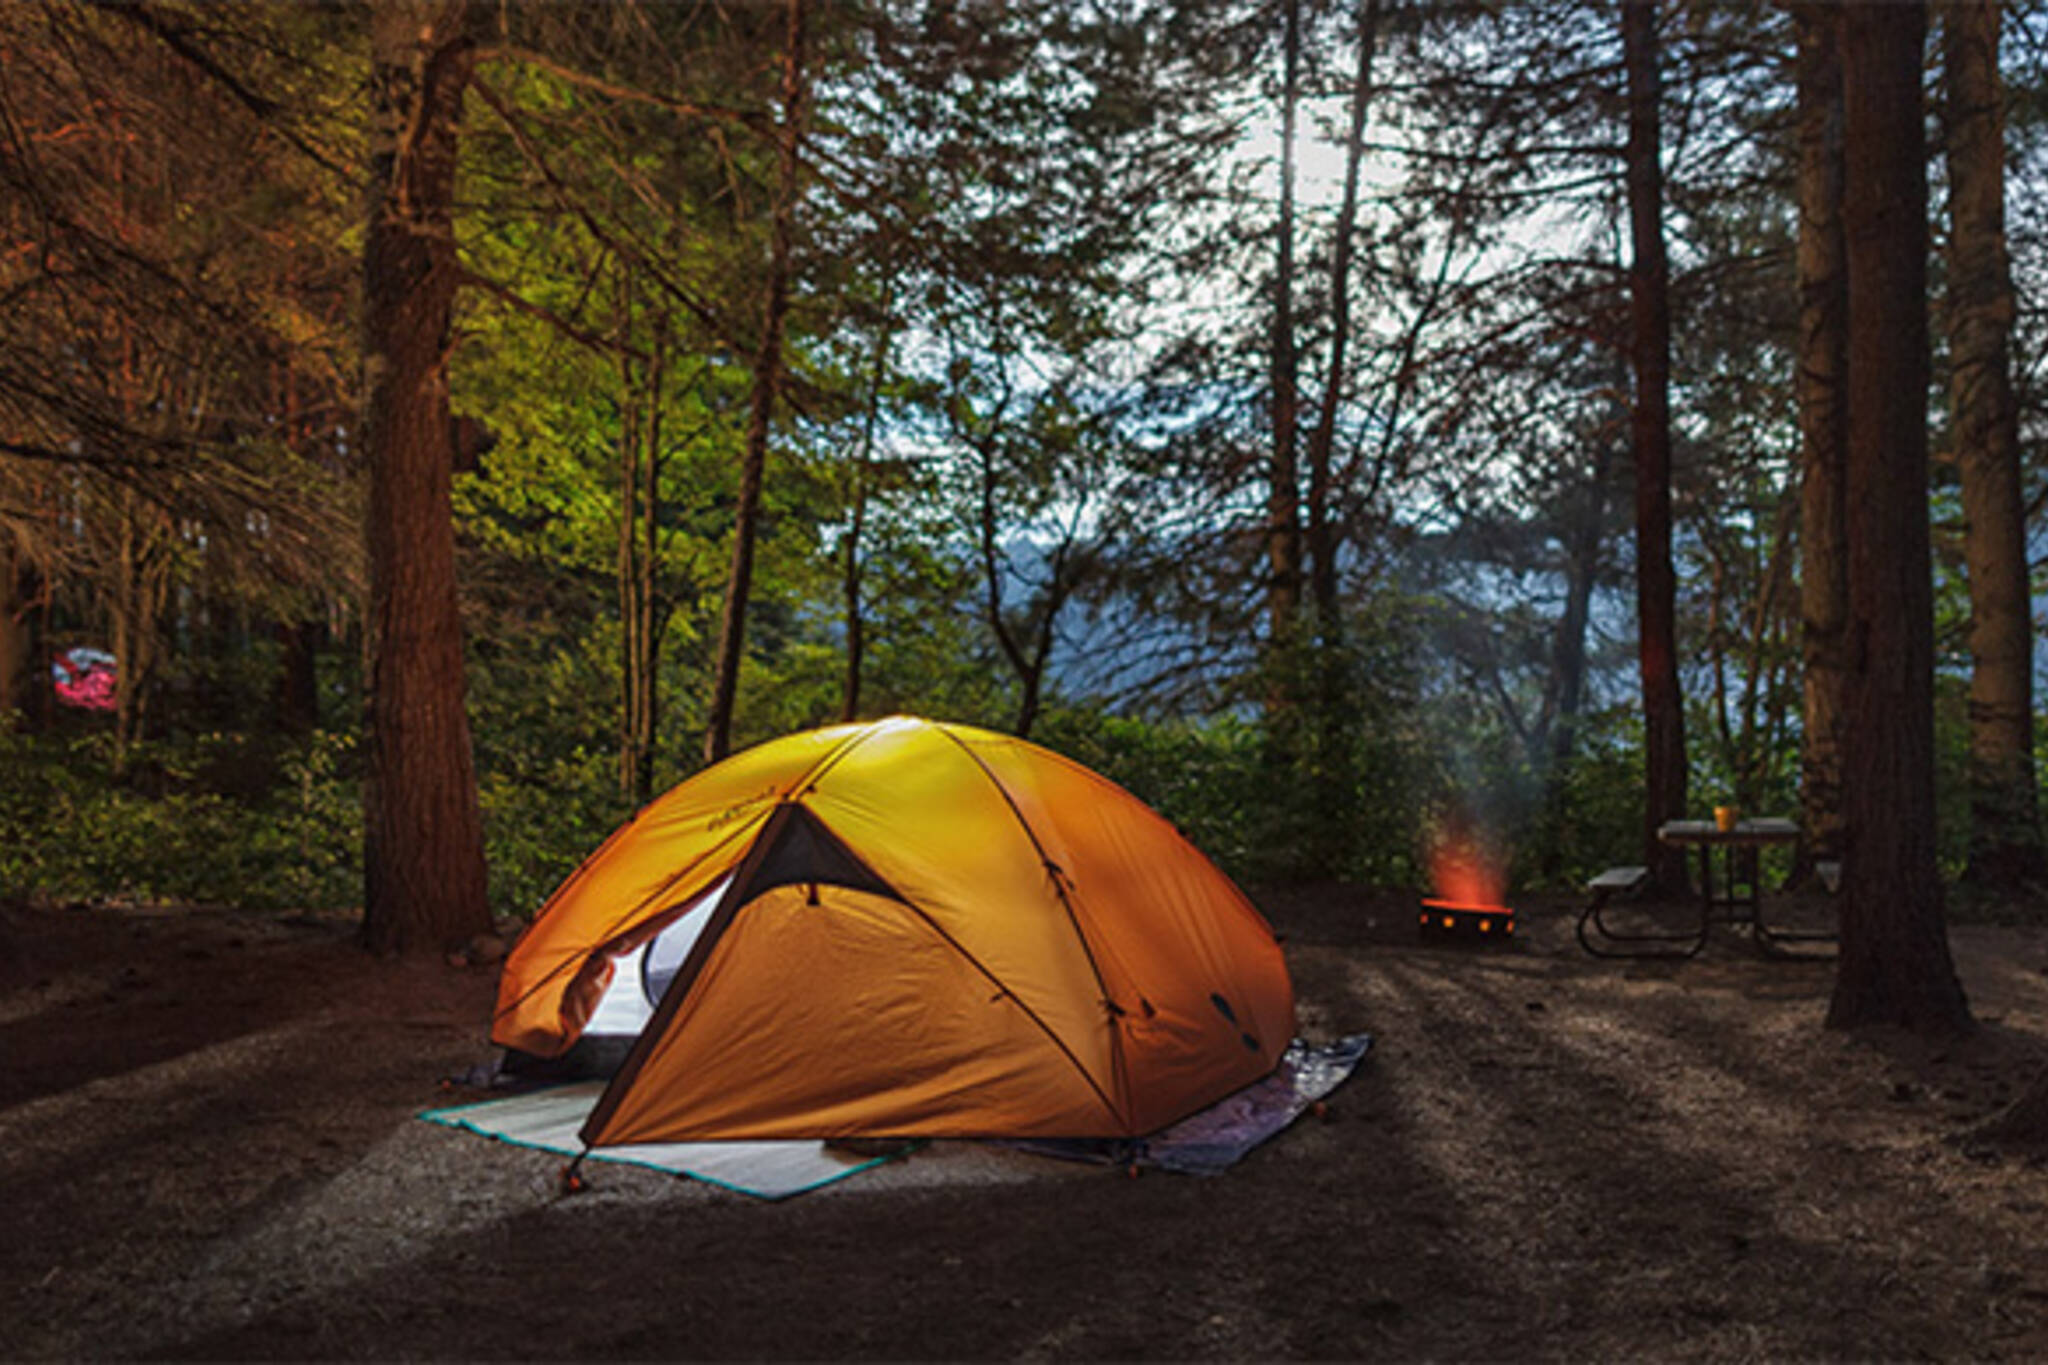 campsites near toronto